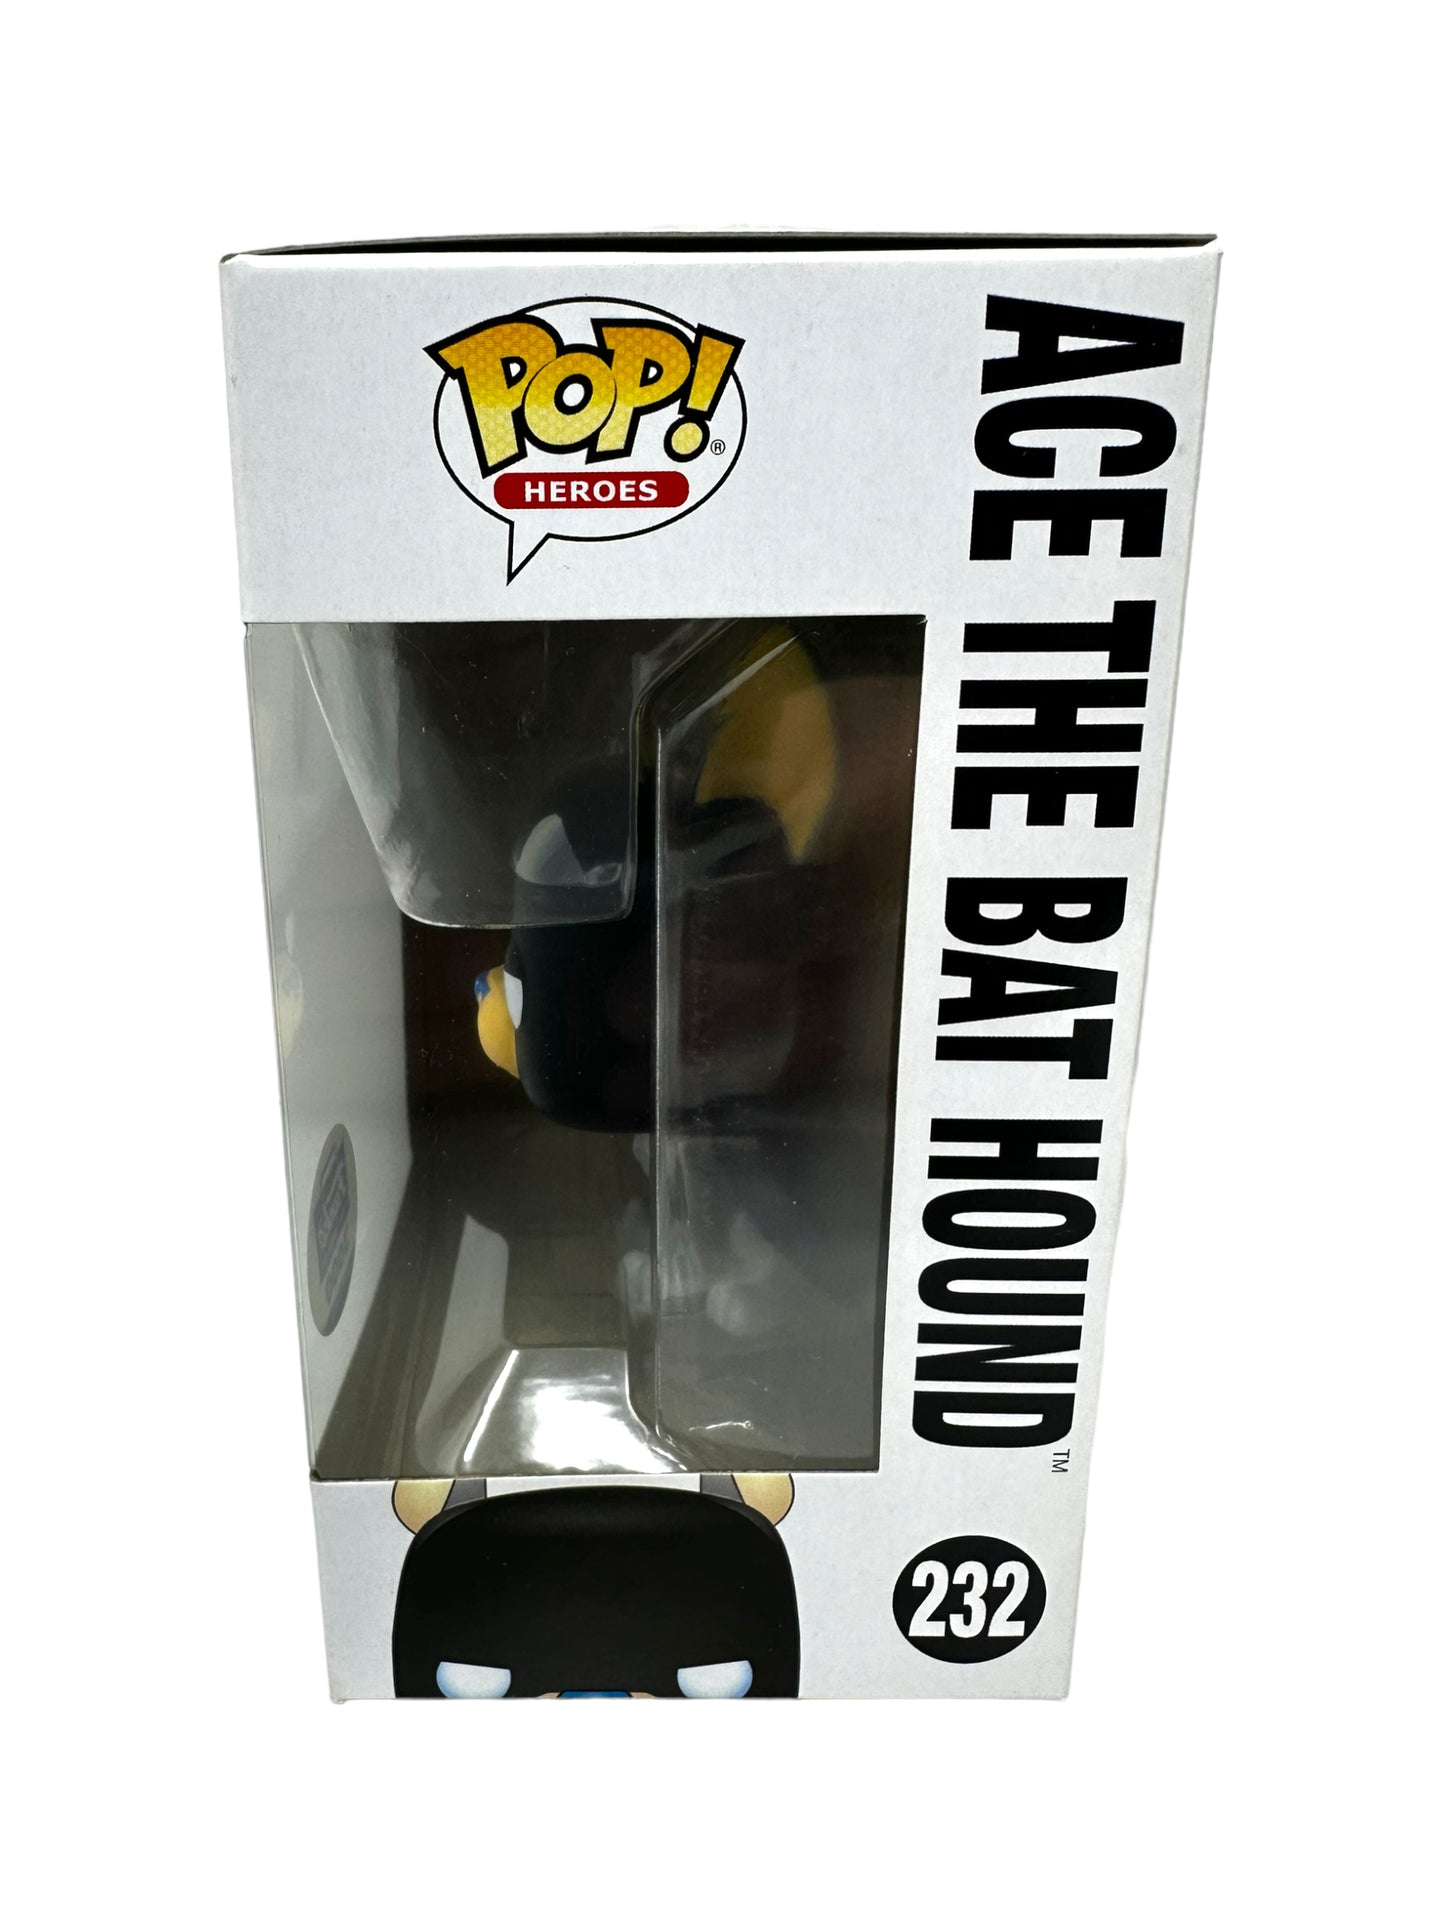 Sold 2017 Funkoshop Ace the Bat Hound 232 LE3000